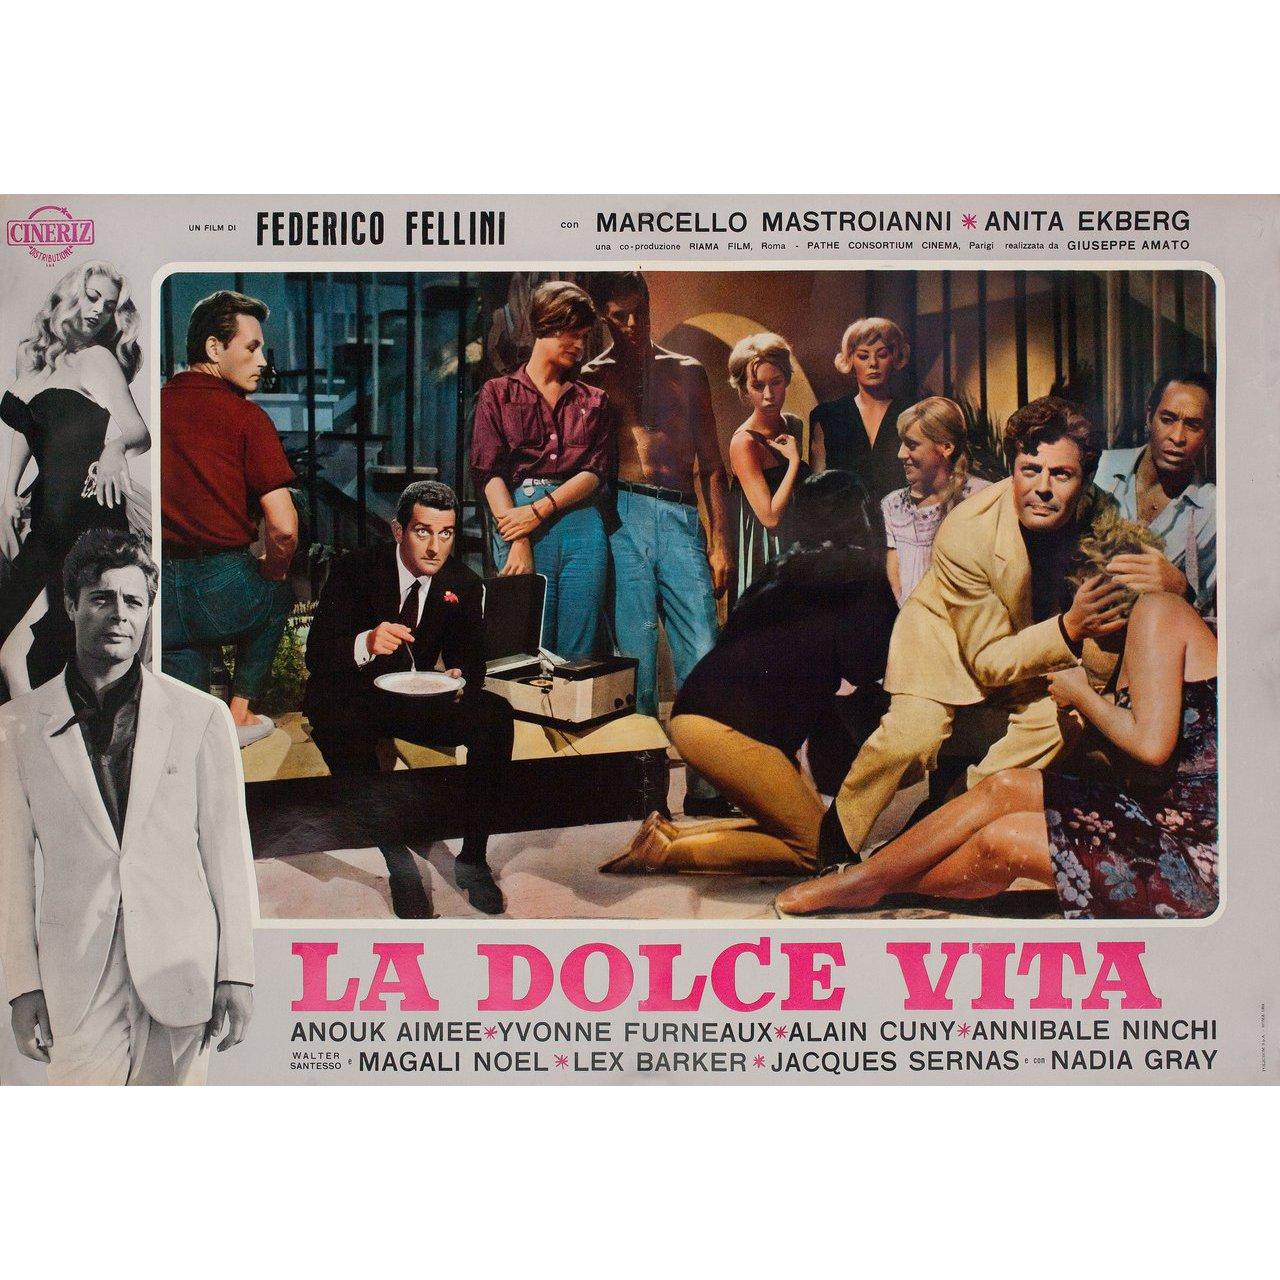 Original 1964 re-release Italian fotobusta poster for the 1960 film La Dolce Vita directed by Federico Fellini with Marcello Mastroianni / Anita Ekberg / Anouk Aimee / Yvonne Furneaux. Very good-fine condition, folded. Many original posters were